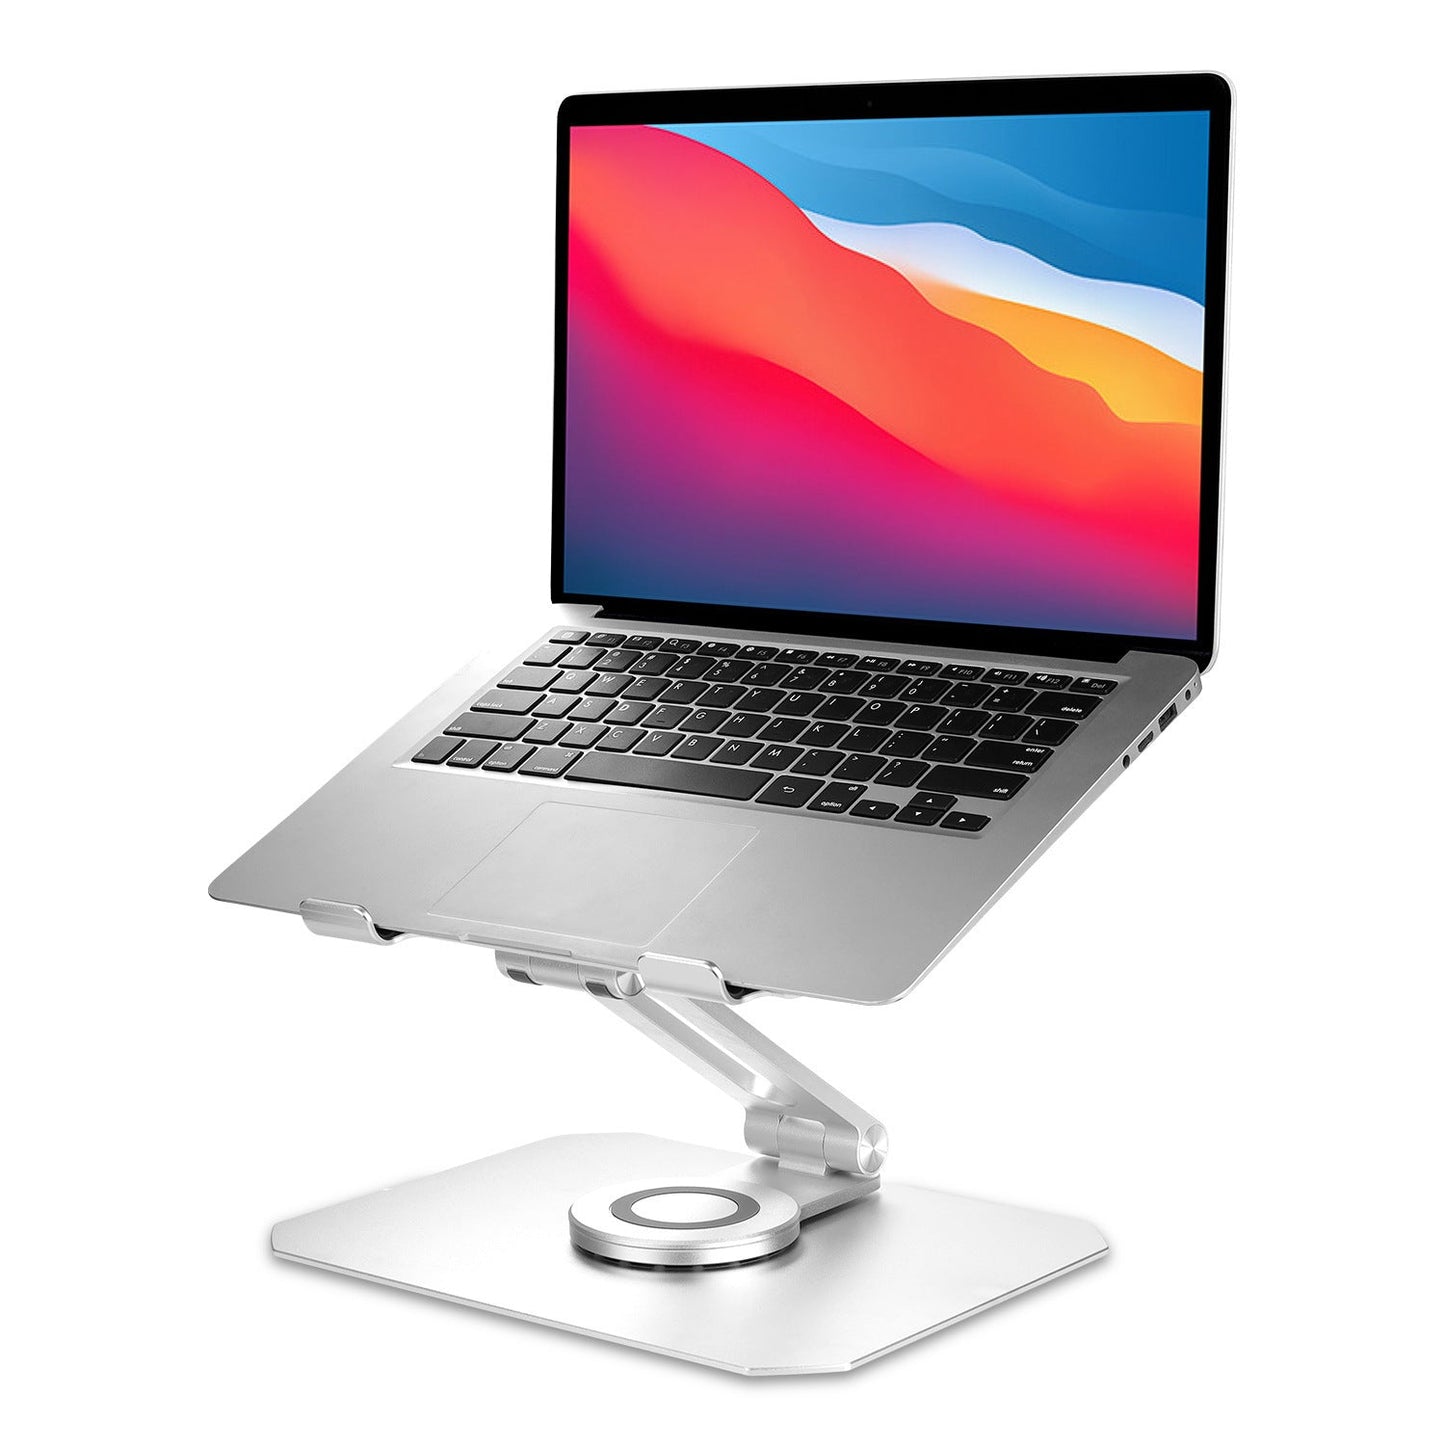 360 Degree Rotating Desktop Laptop Stand